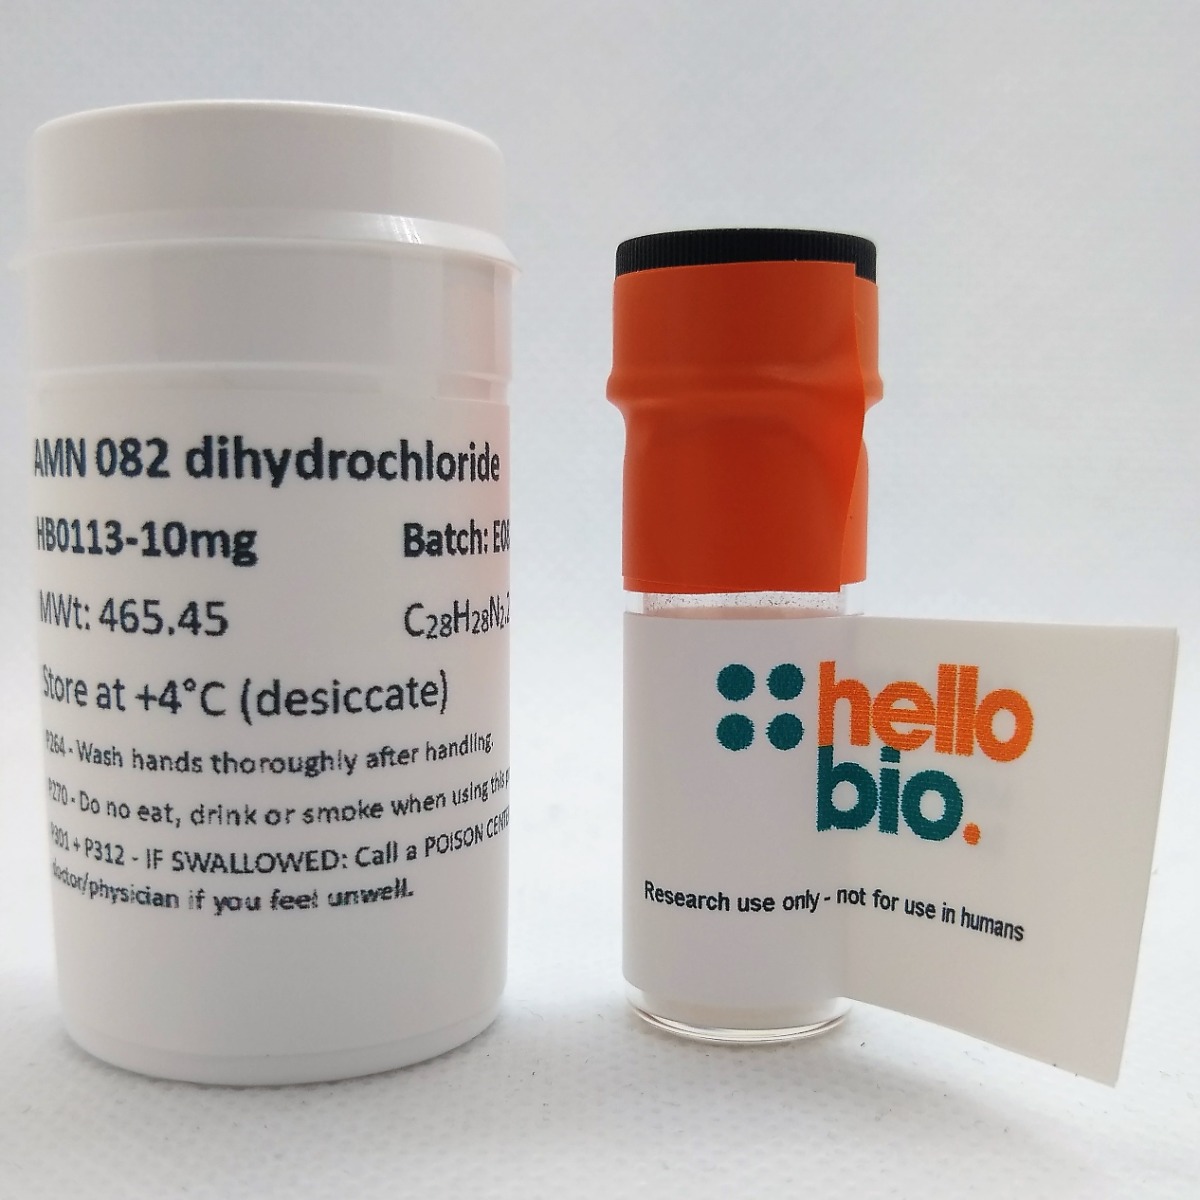 AMN 082 dihydrochloride product vial image | Hello Bio